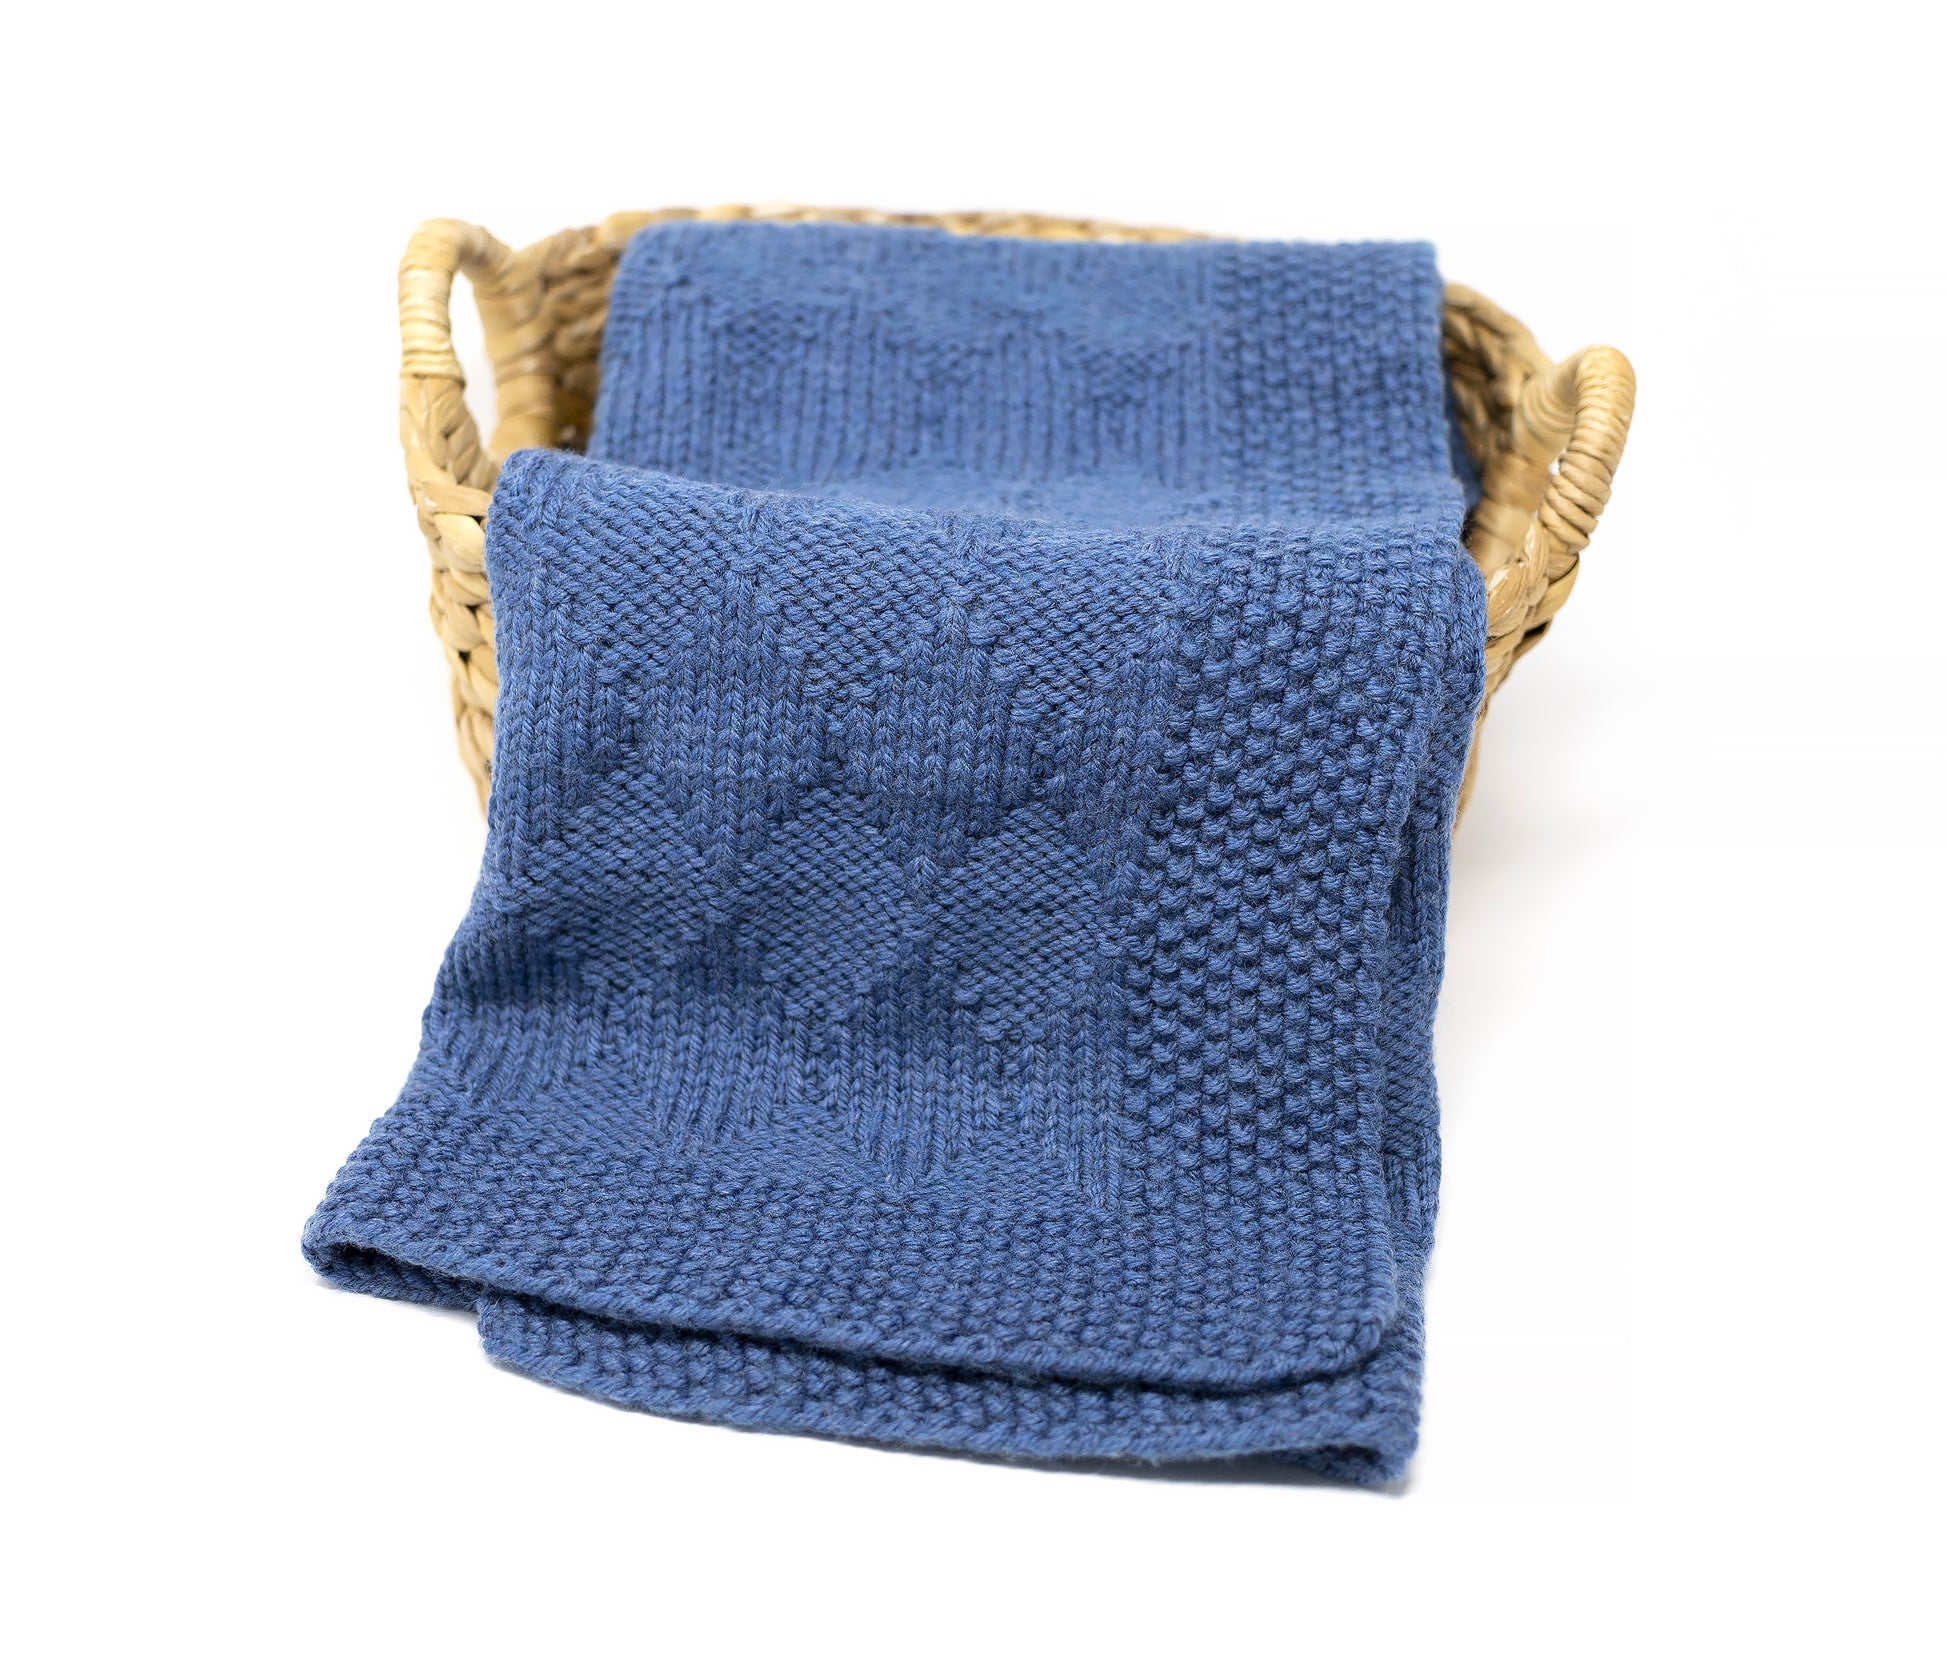 Blue superwash wool hand-knitted baby blanket in Harlequin pattern